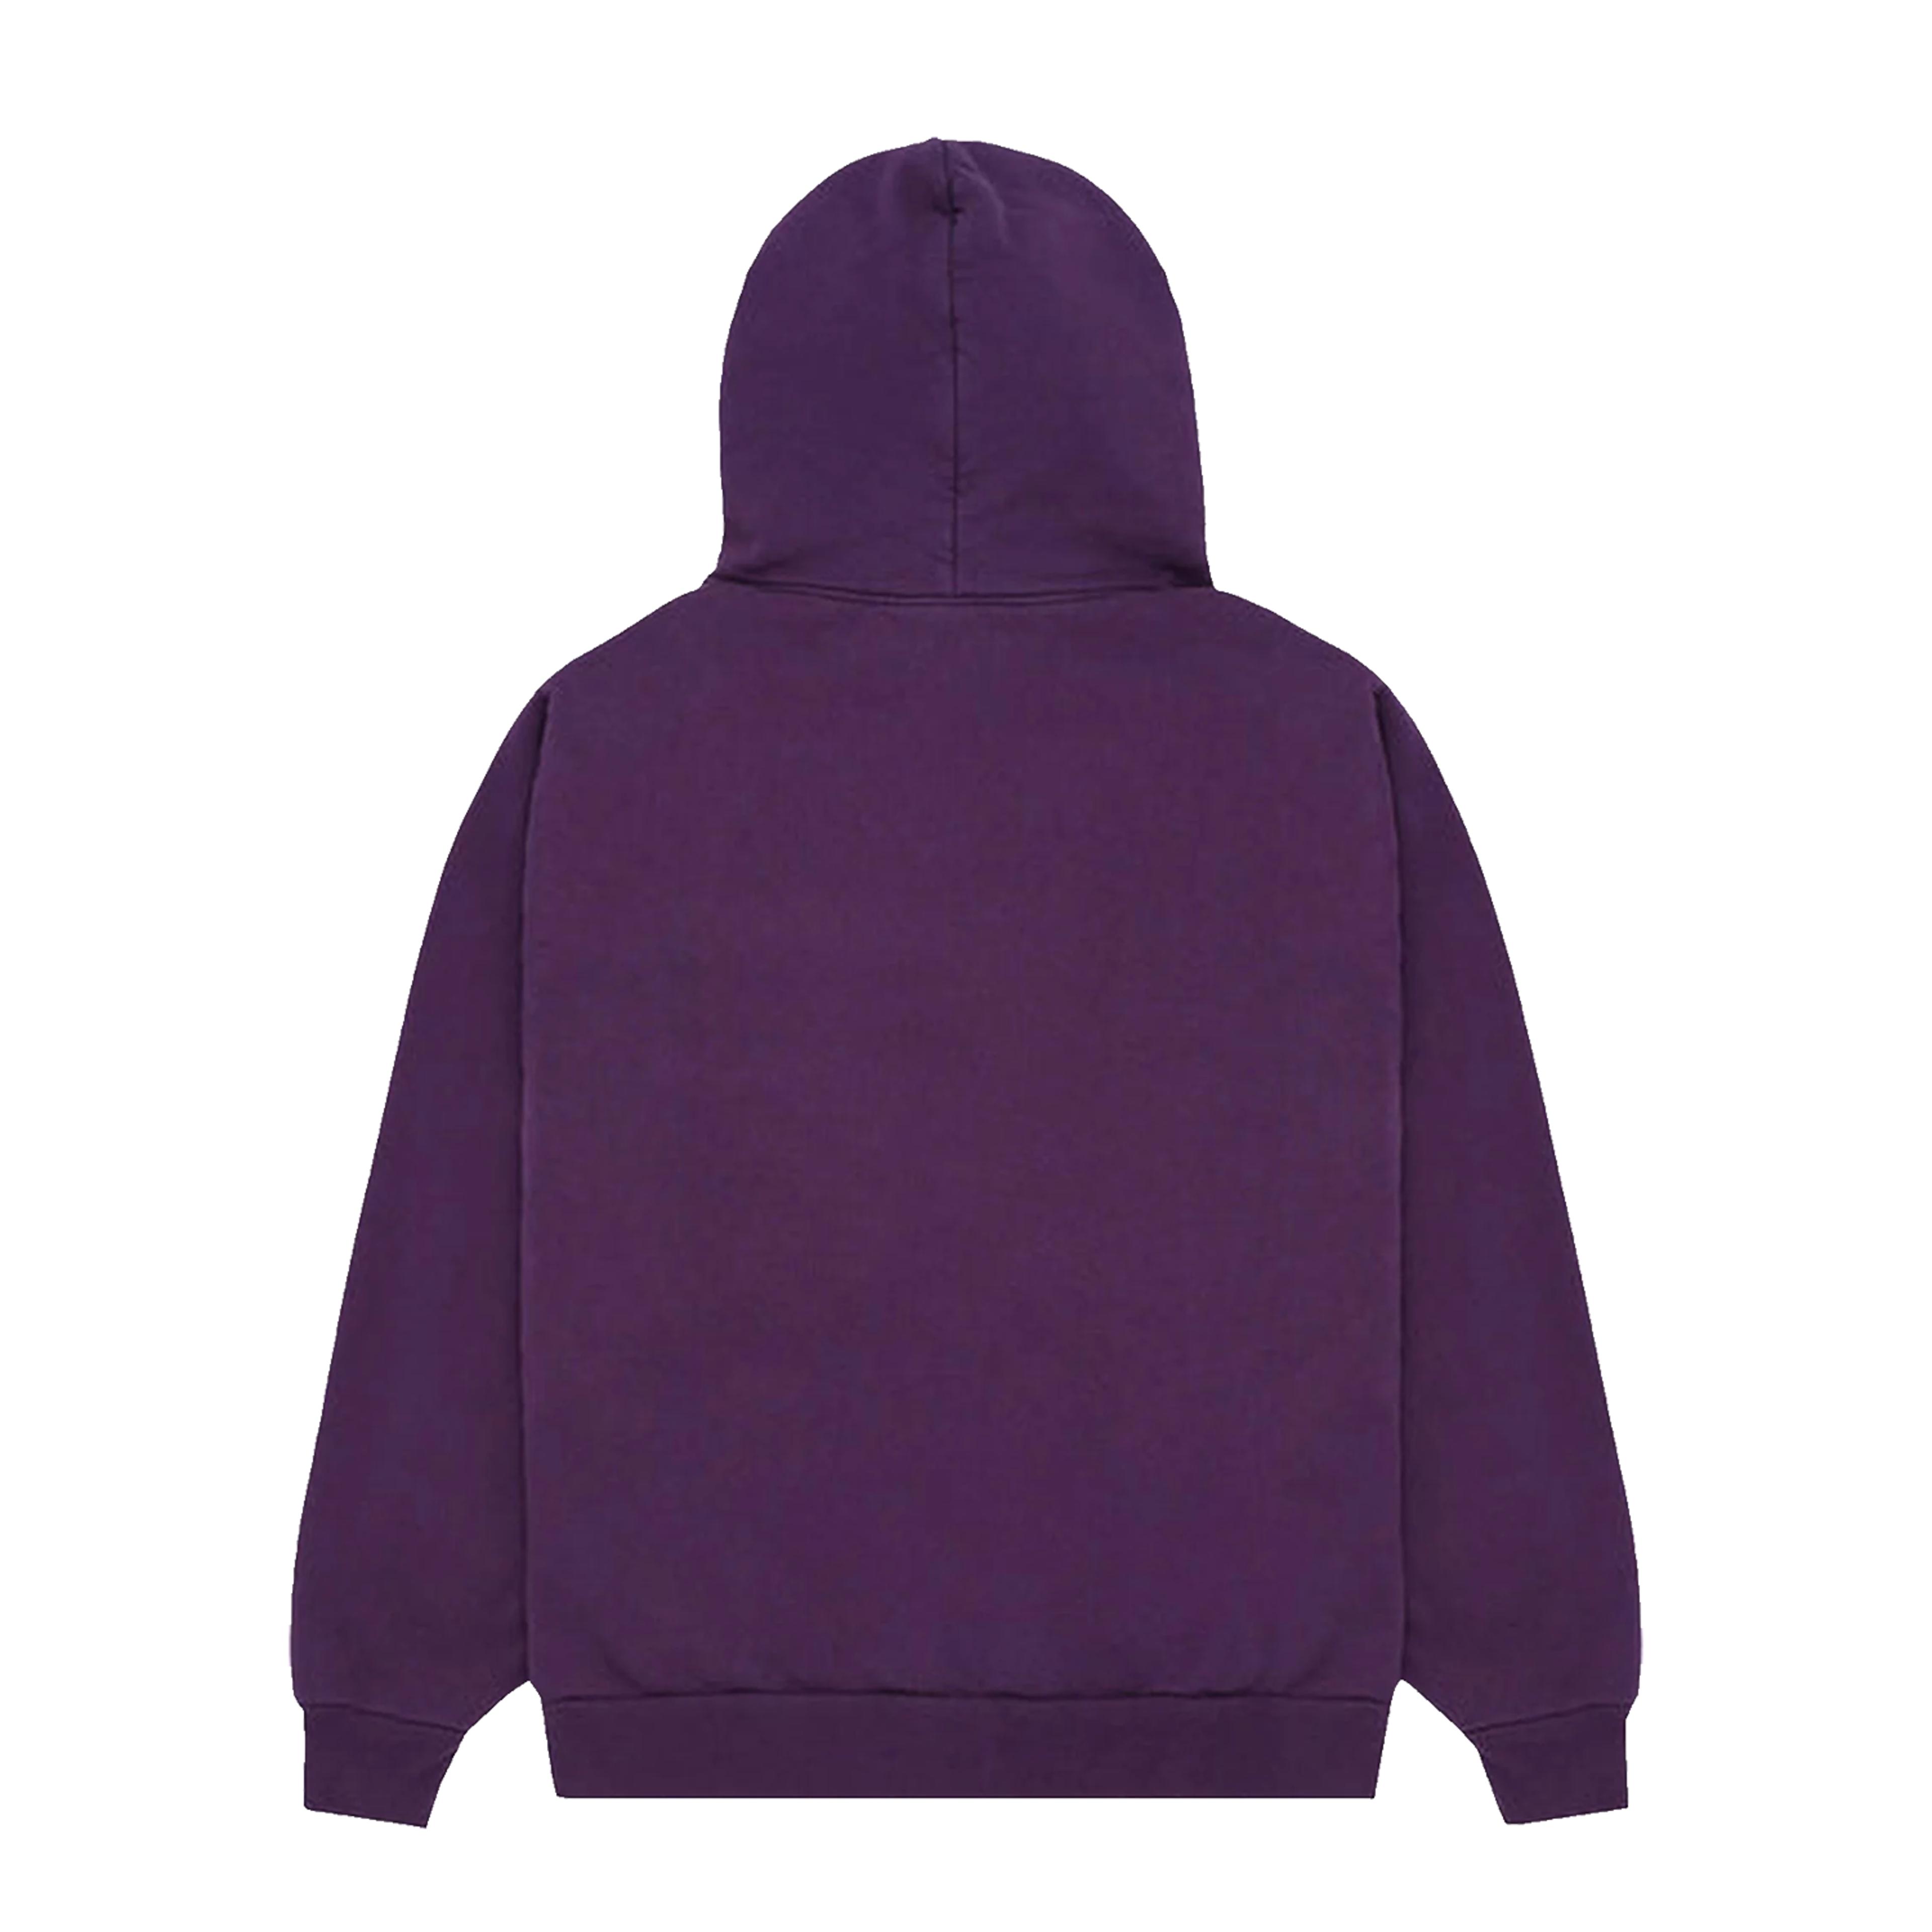 Alternate View 1 of Sp5der Worldwide Web Sweatshirt Purple